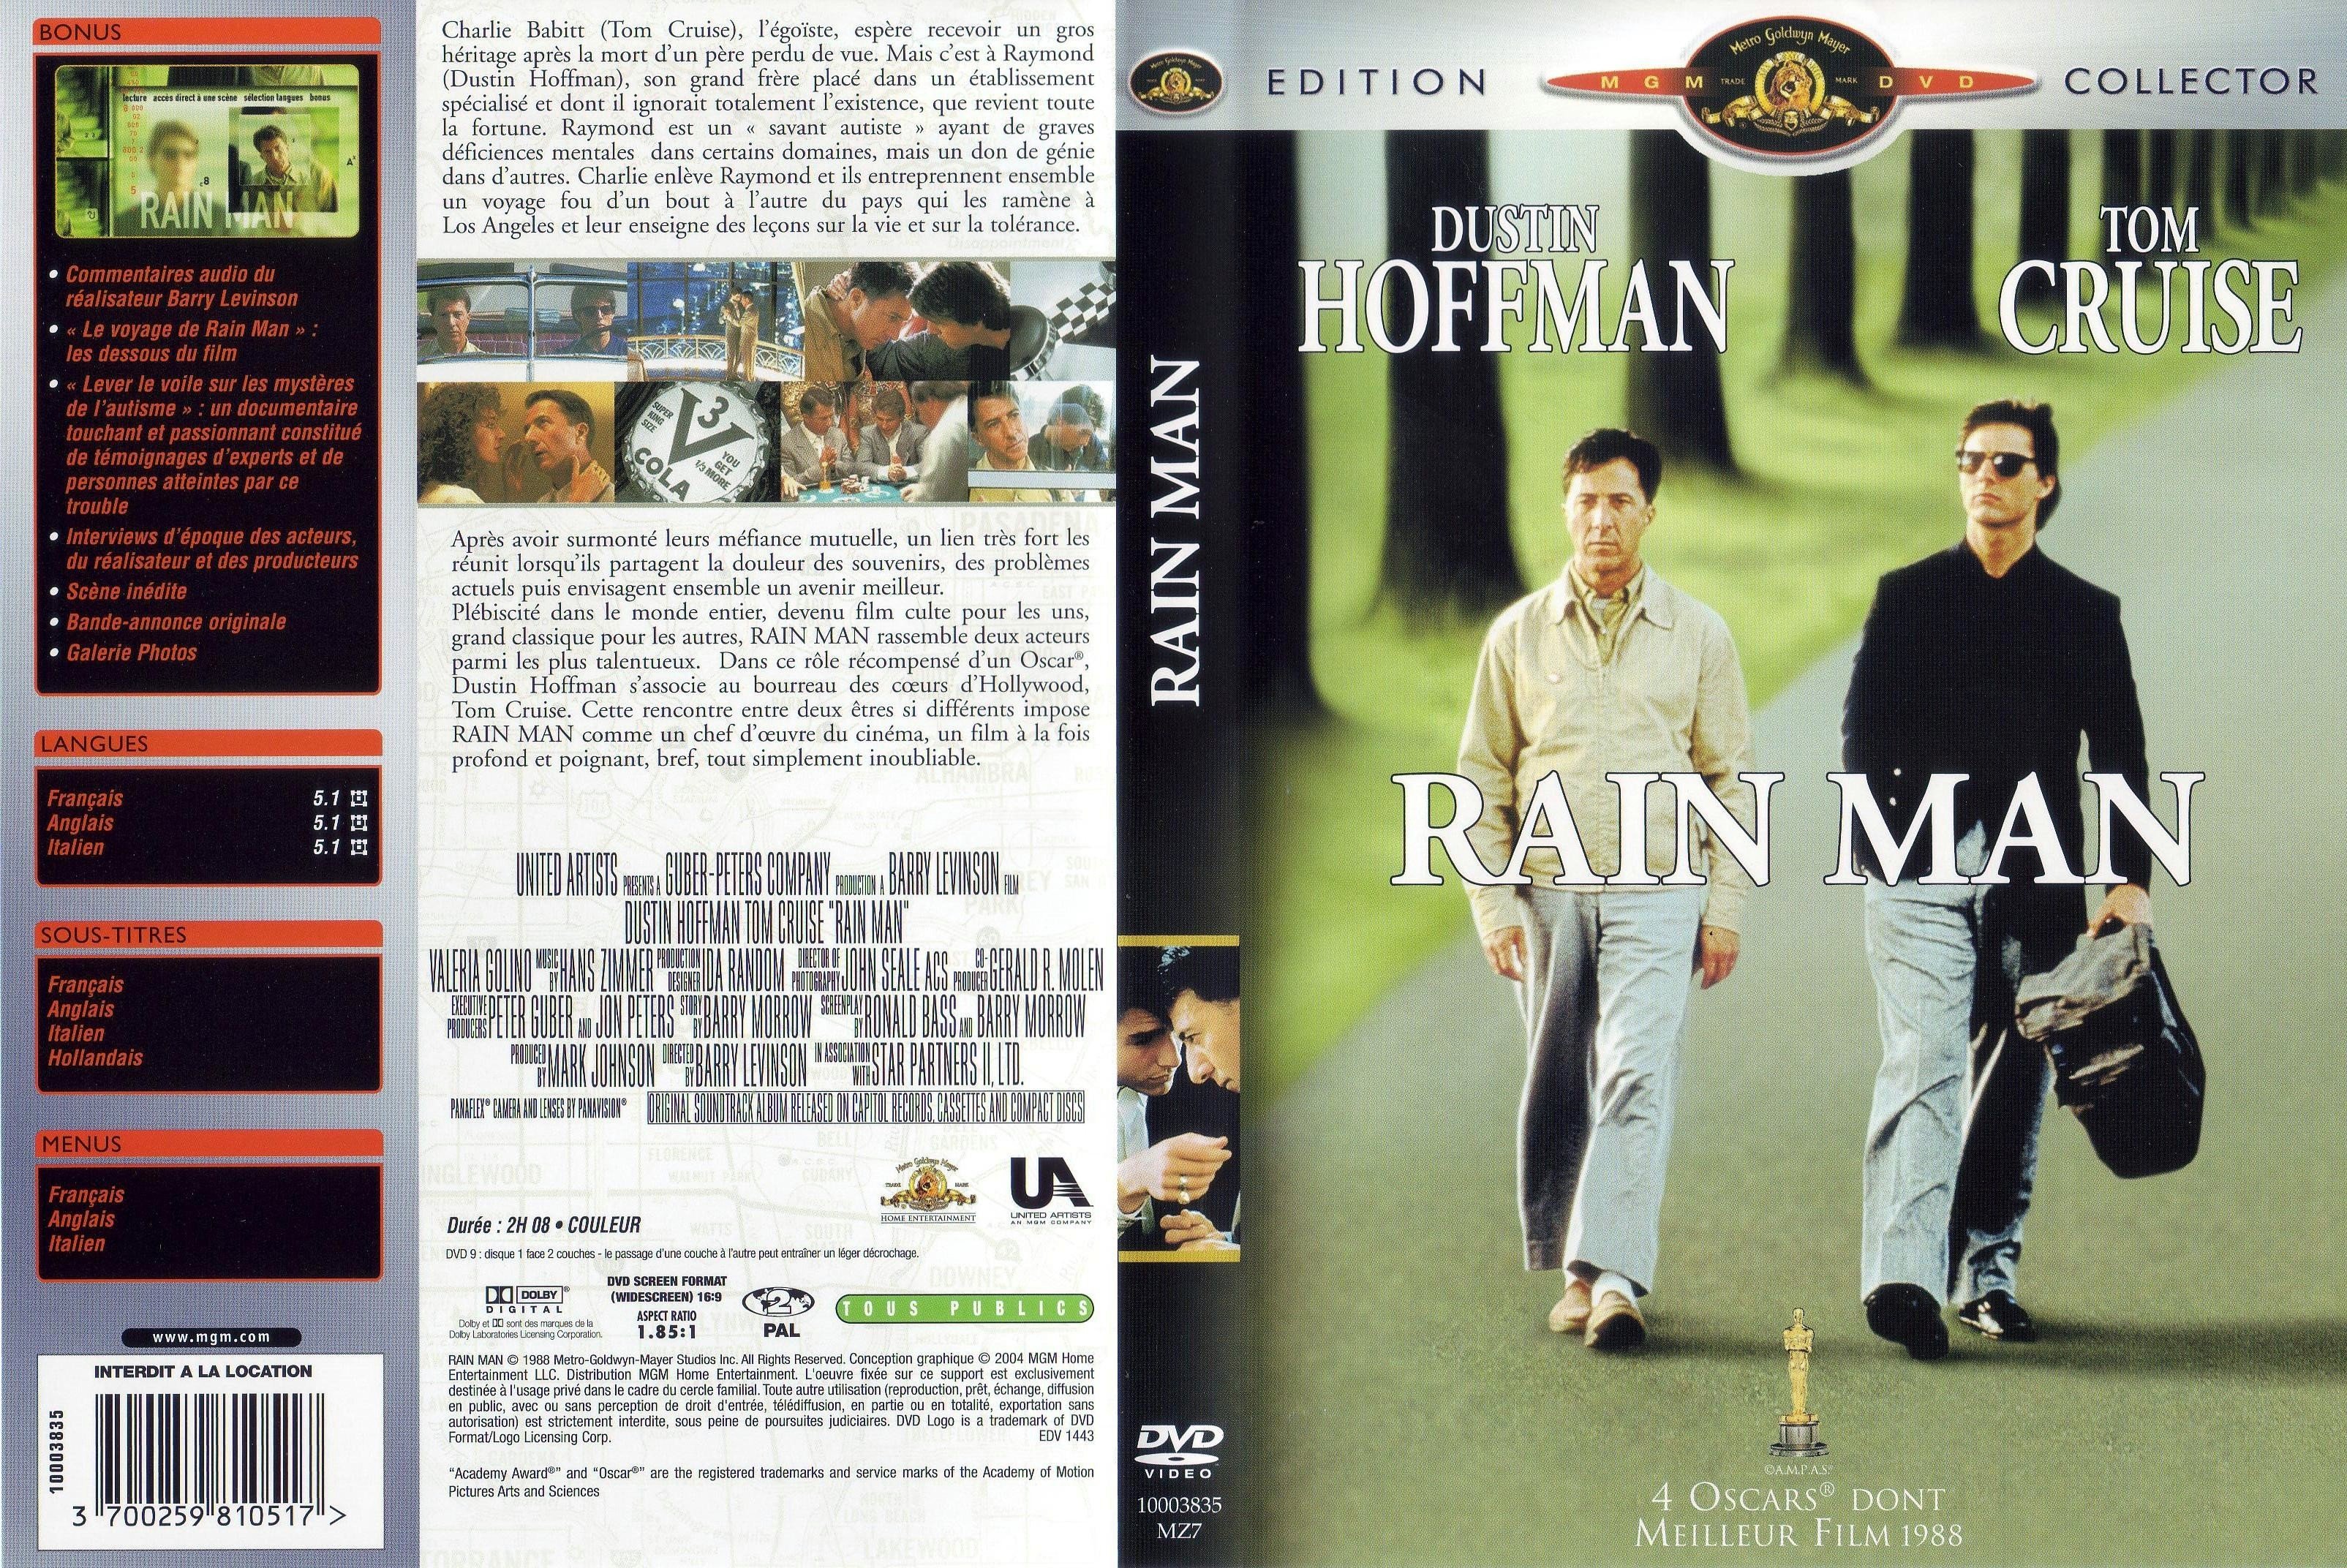 Jaquette DVD Rain man v2